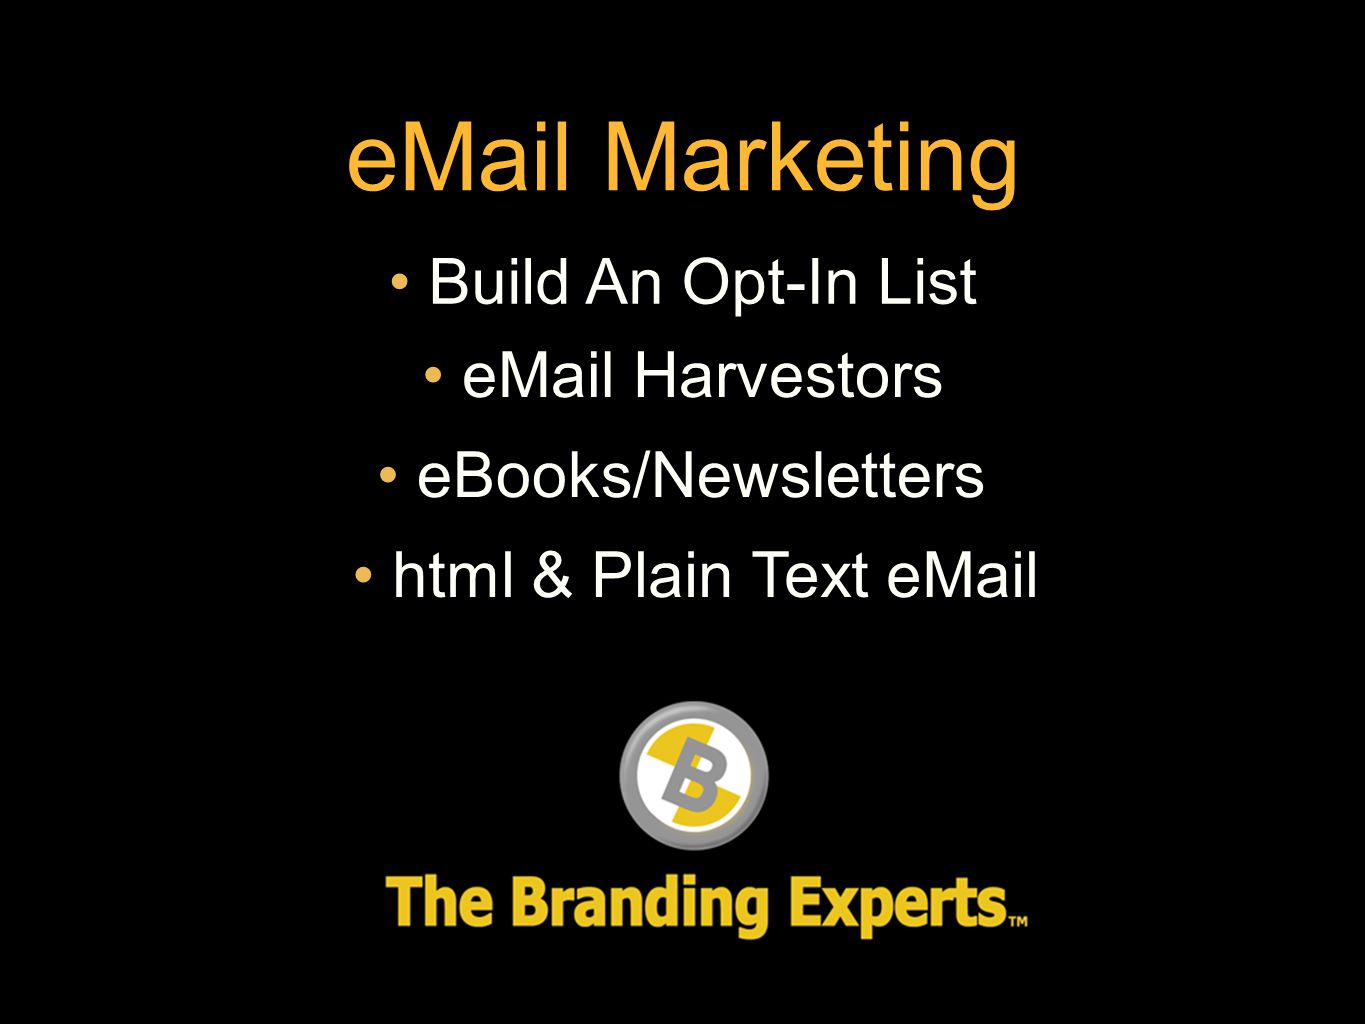 Marketing Build An Opt-In List eBooks/Newsletters  Harvestors html & Plain Text